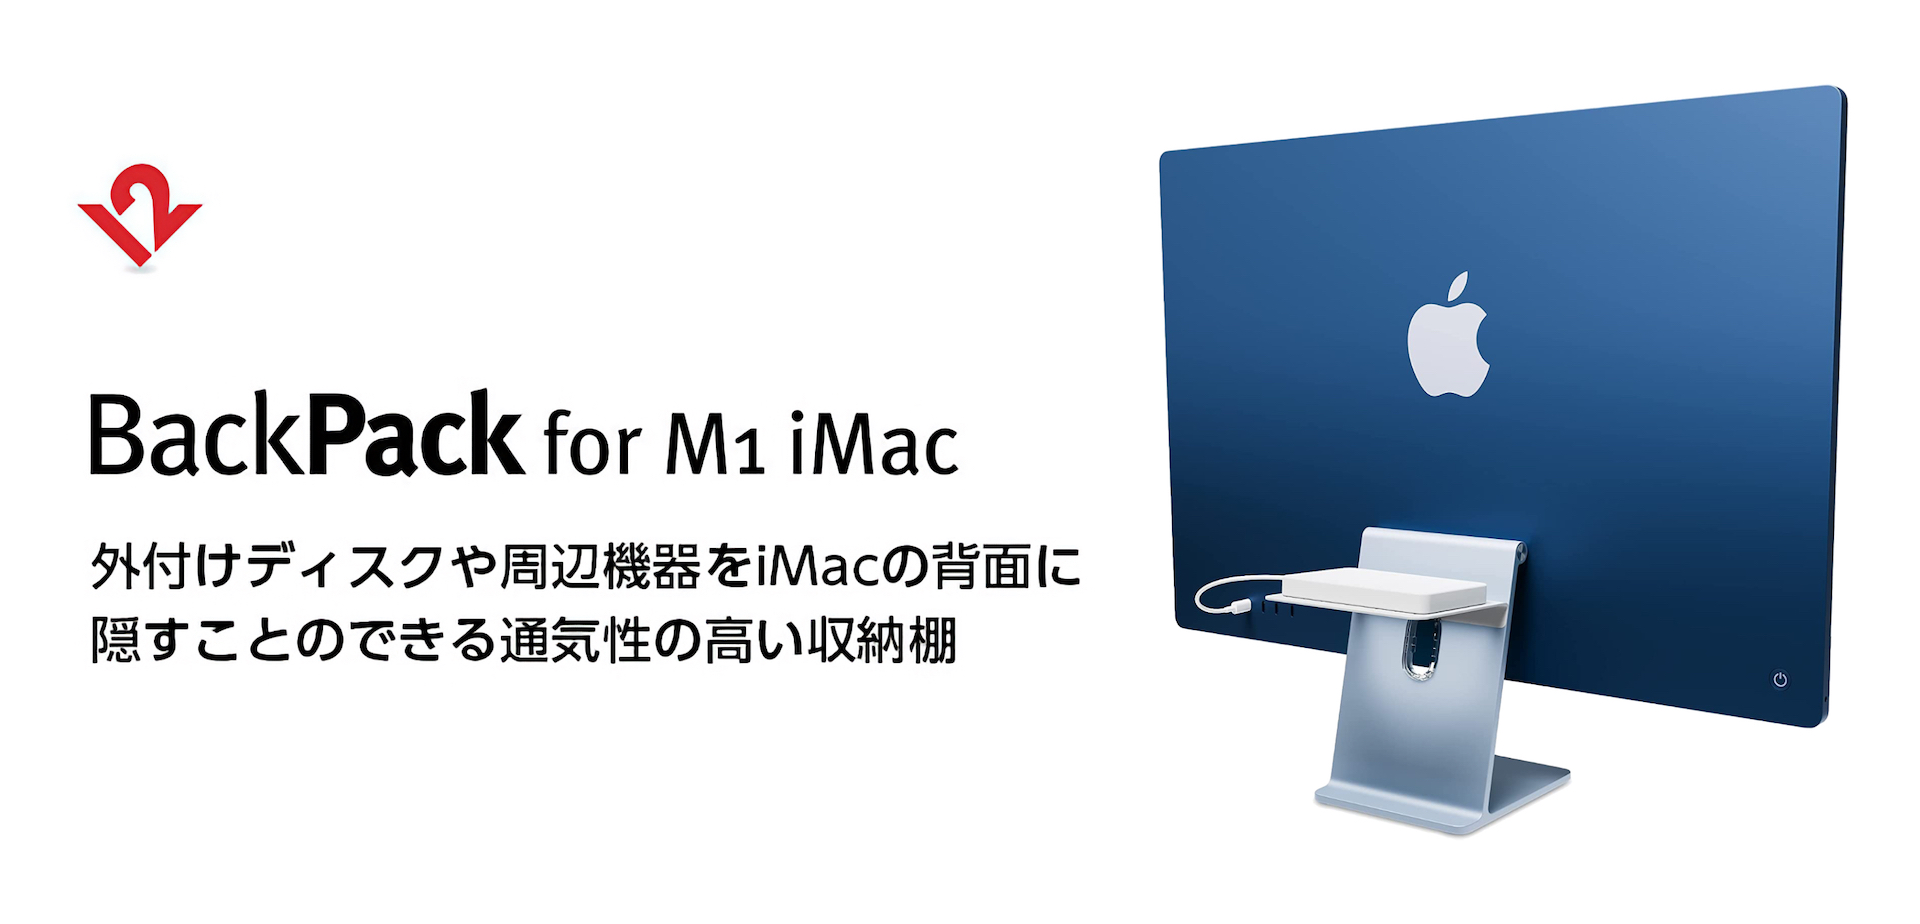 Twelve South BackPack for M1 iMac